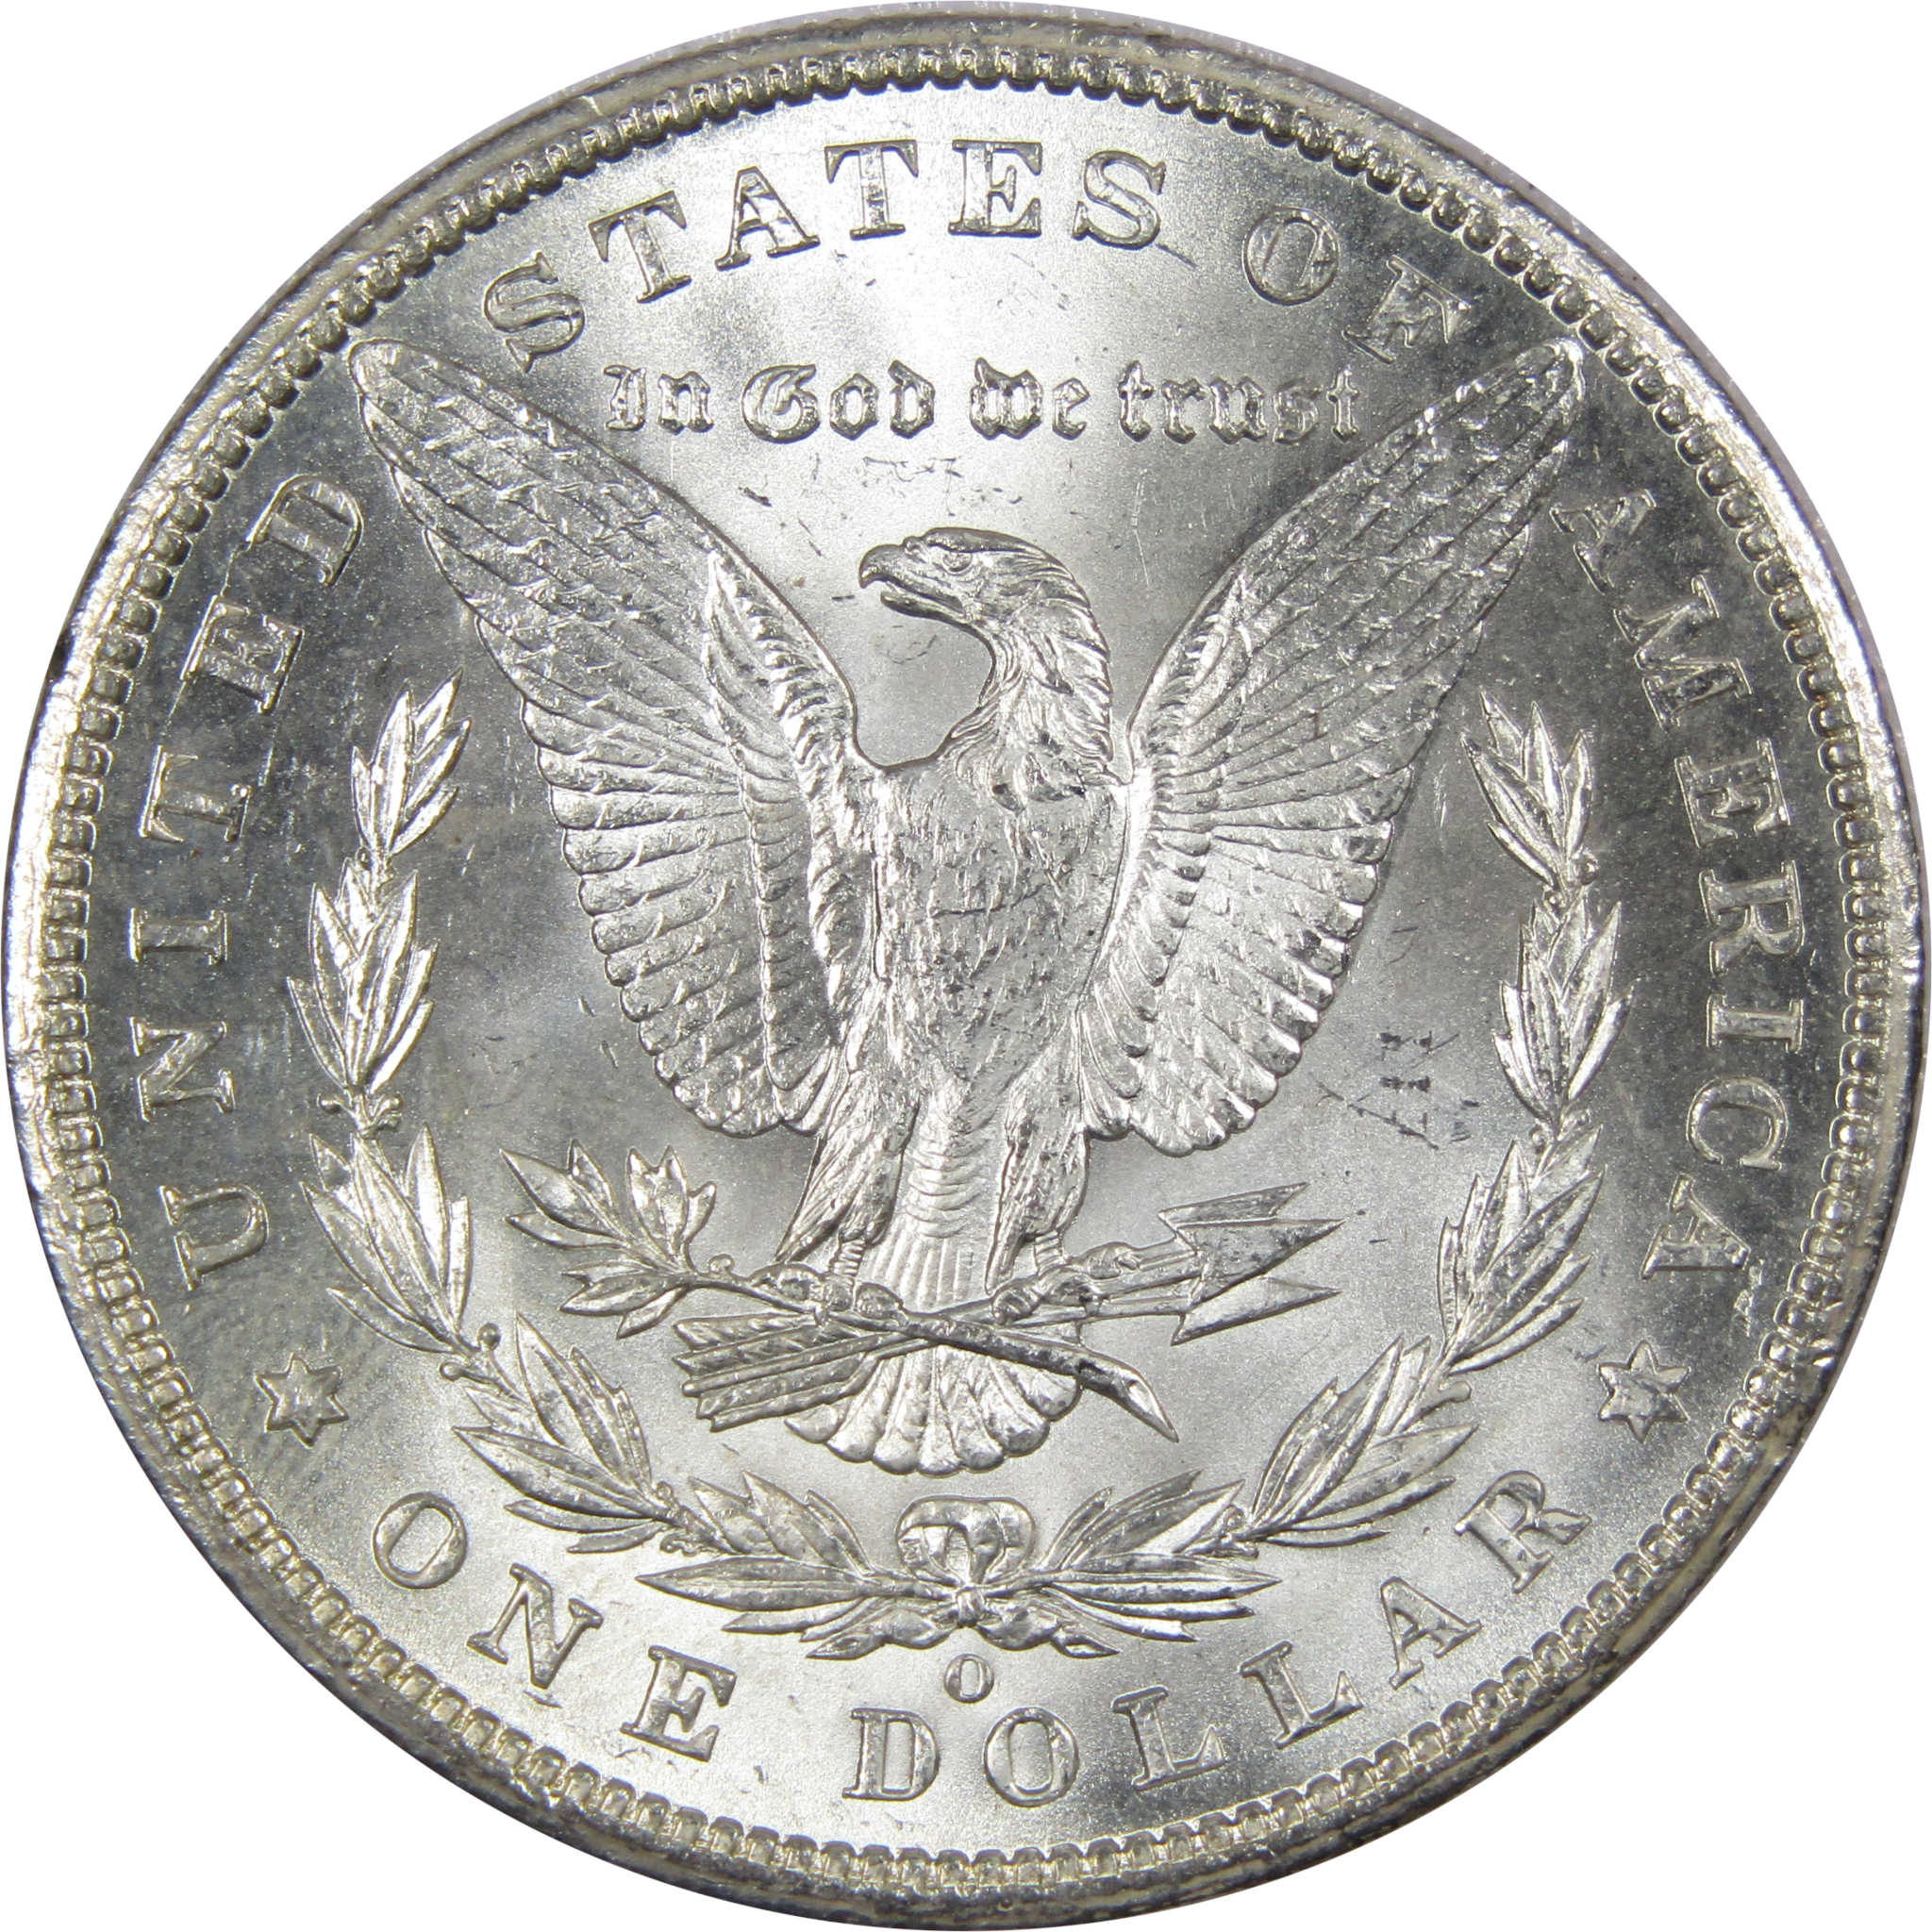 1900 O Morgan Dollar BU Uncirculated Mint State 90% Silver SKU:IPC9781 - Morgan coin - Morgan silver dollar - Morgan silver dollar for sale - Profile Coins &amp; Collectibles